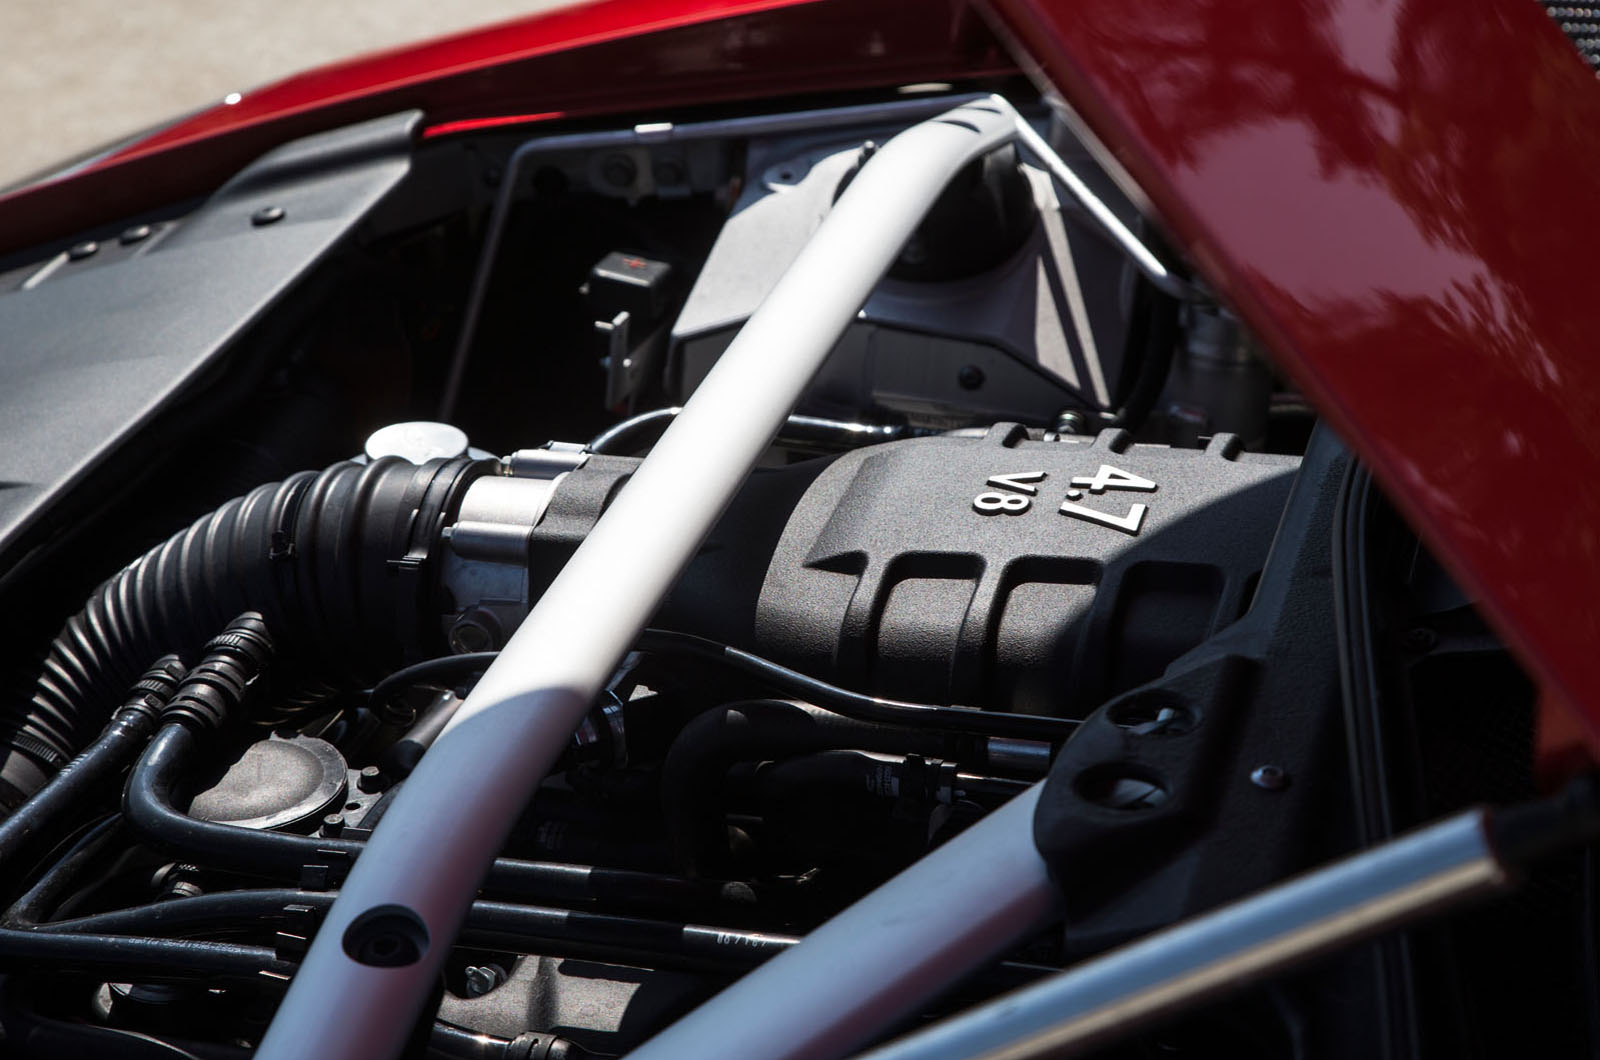 4.7-litre V8 Aston Martin Vantage GT8 engine